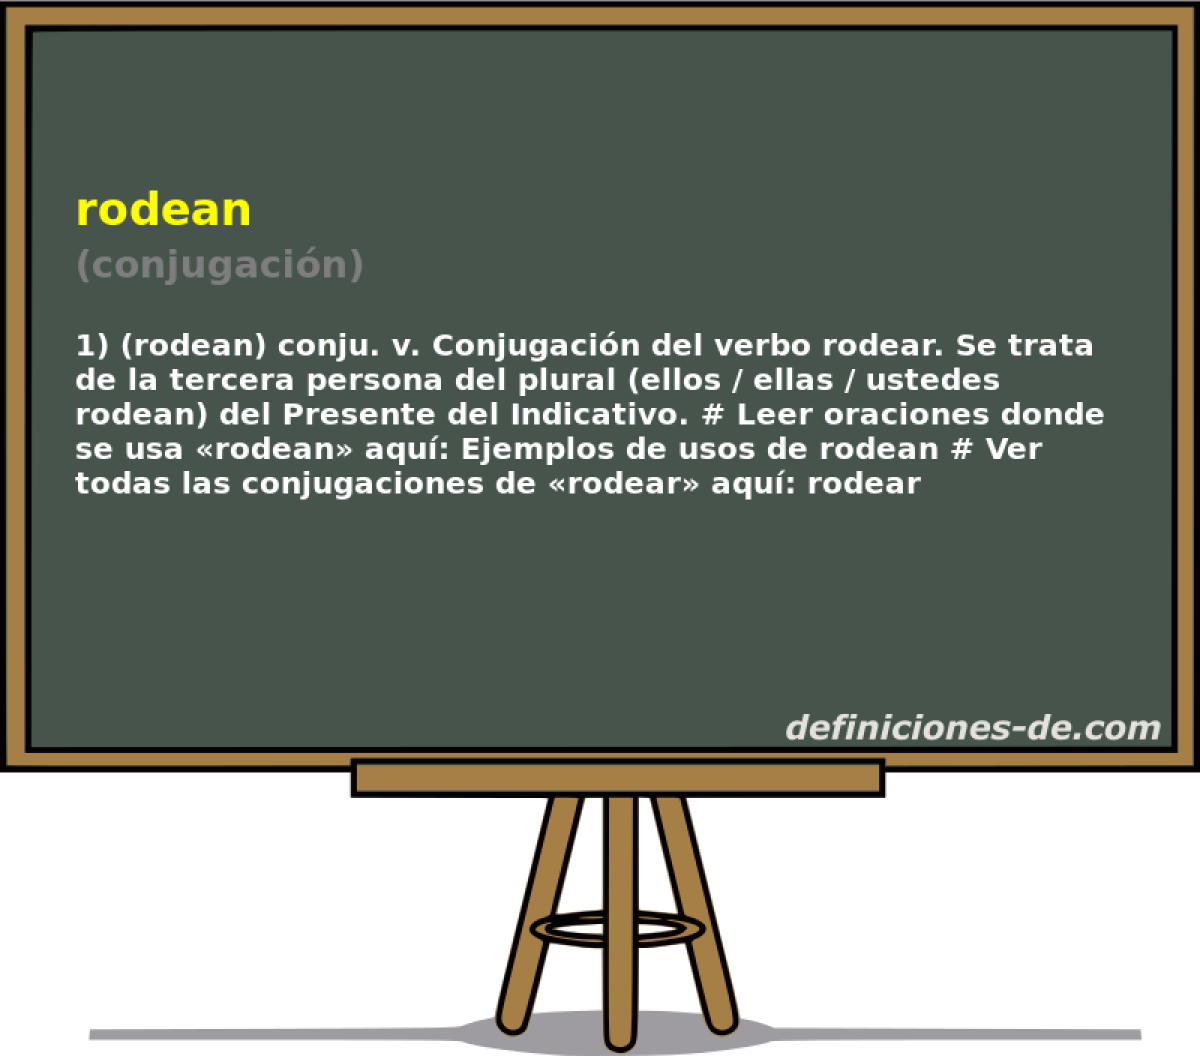 rodean (conjugacin)